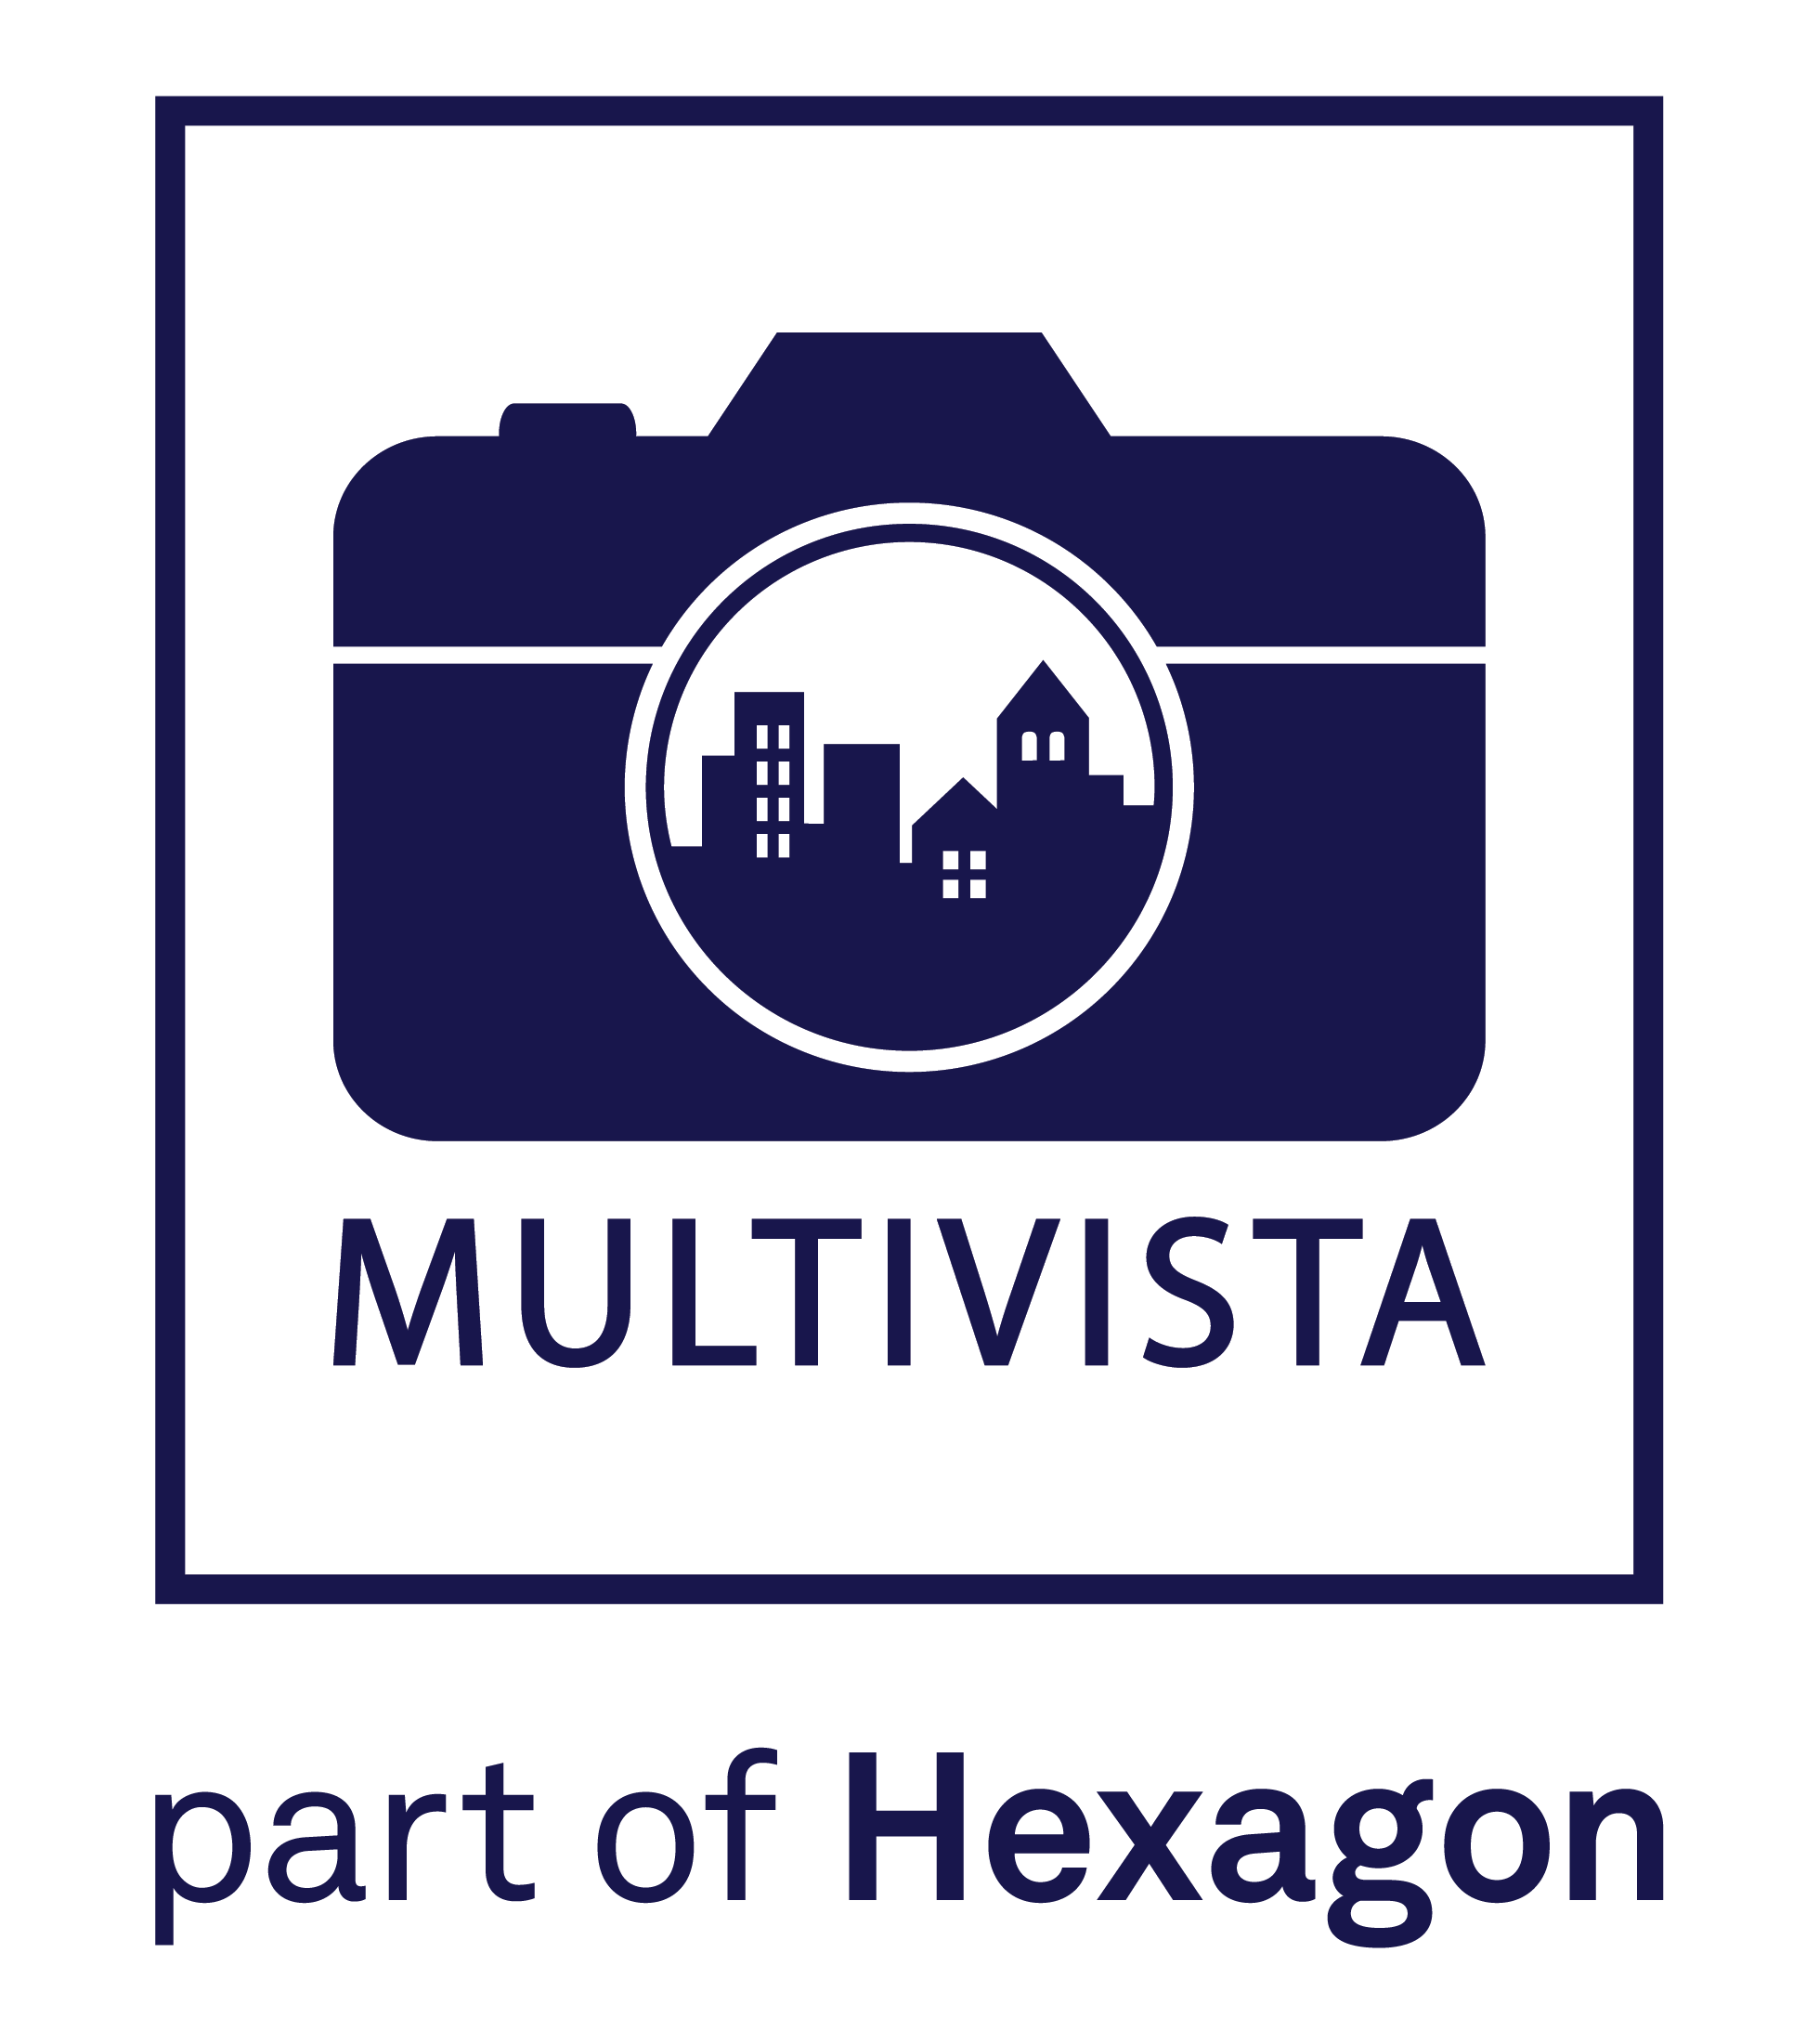 MULTIVISTA_LOGO_ENDORSED_WHITE-PART-OF-HEXAGON-01